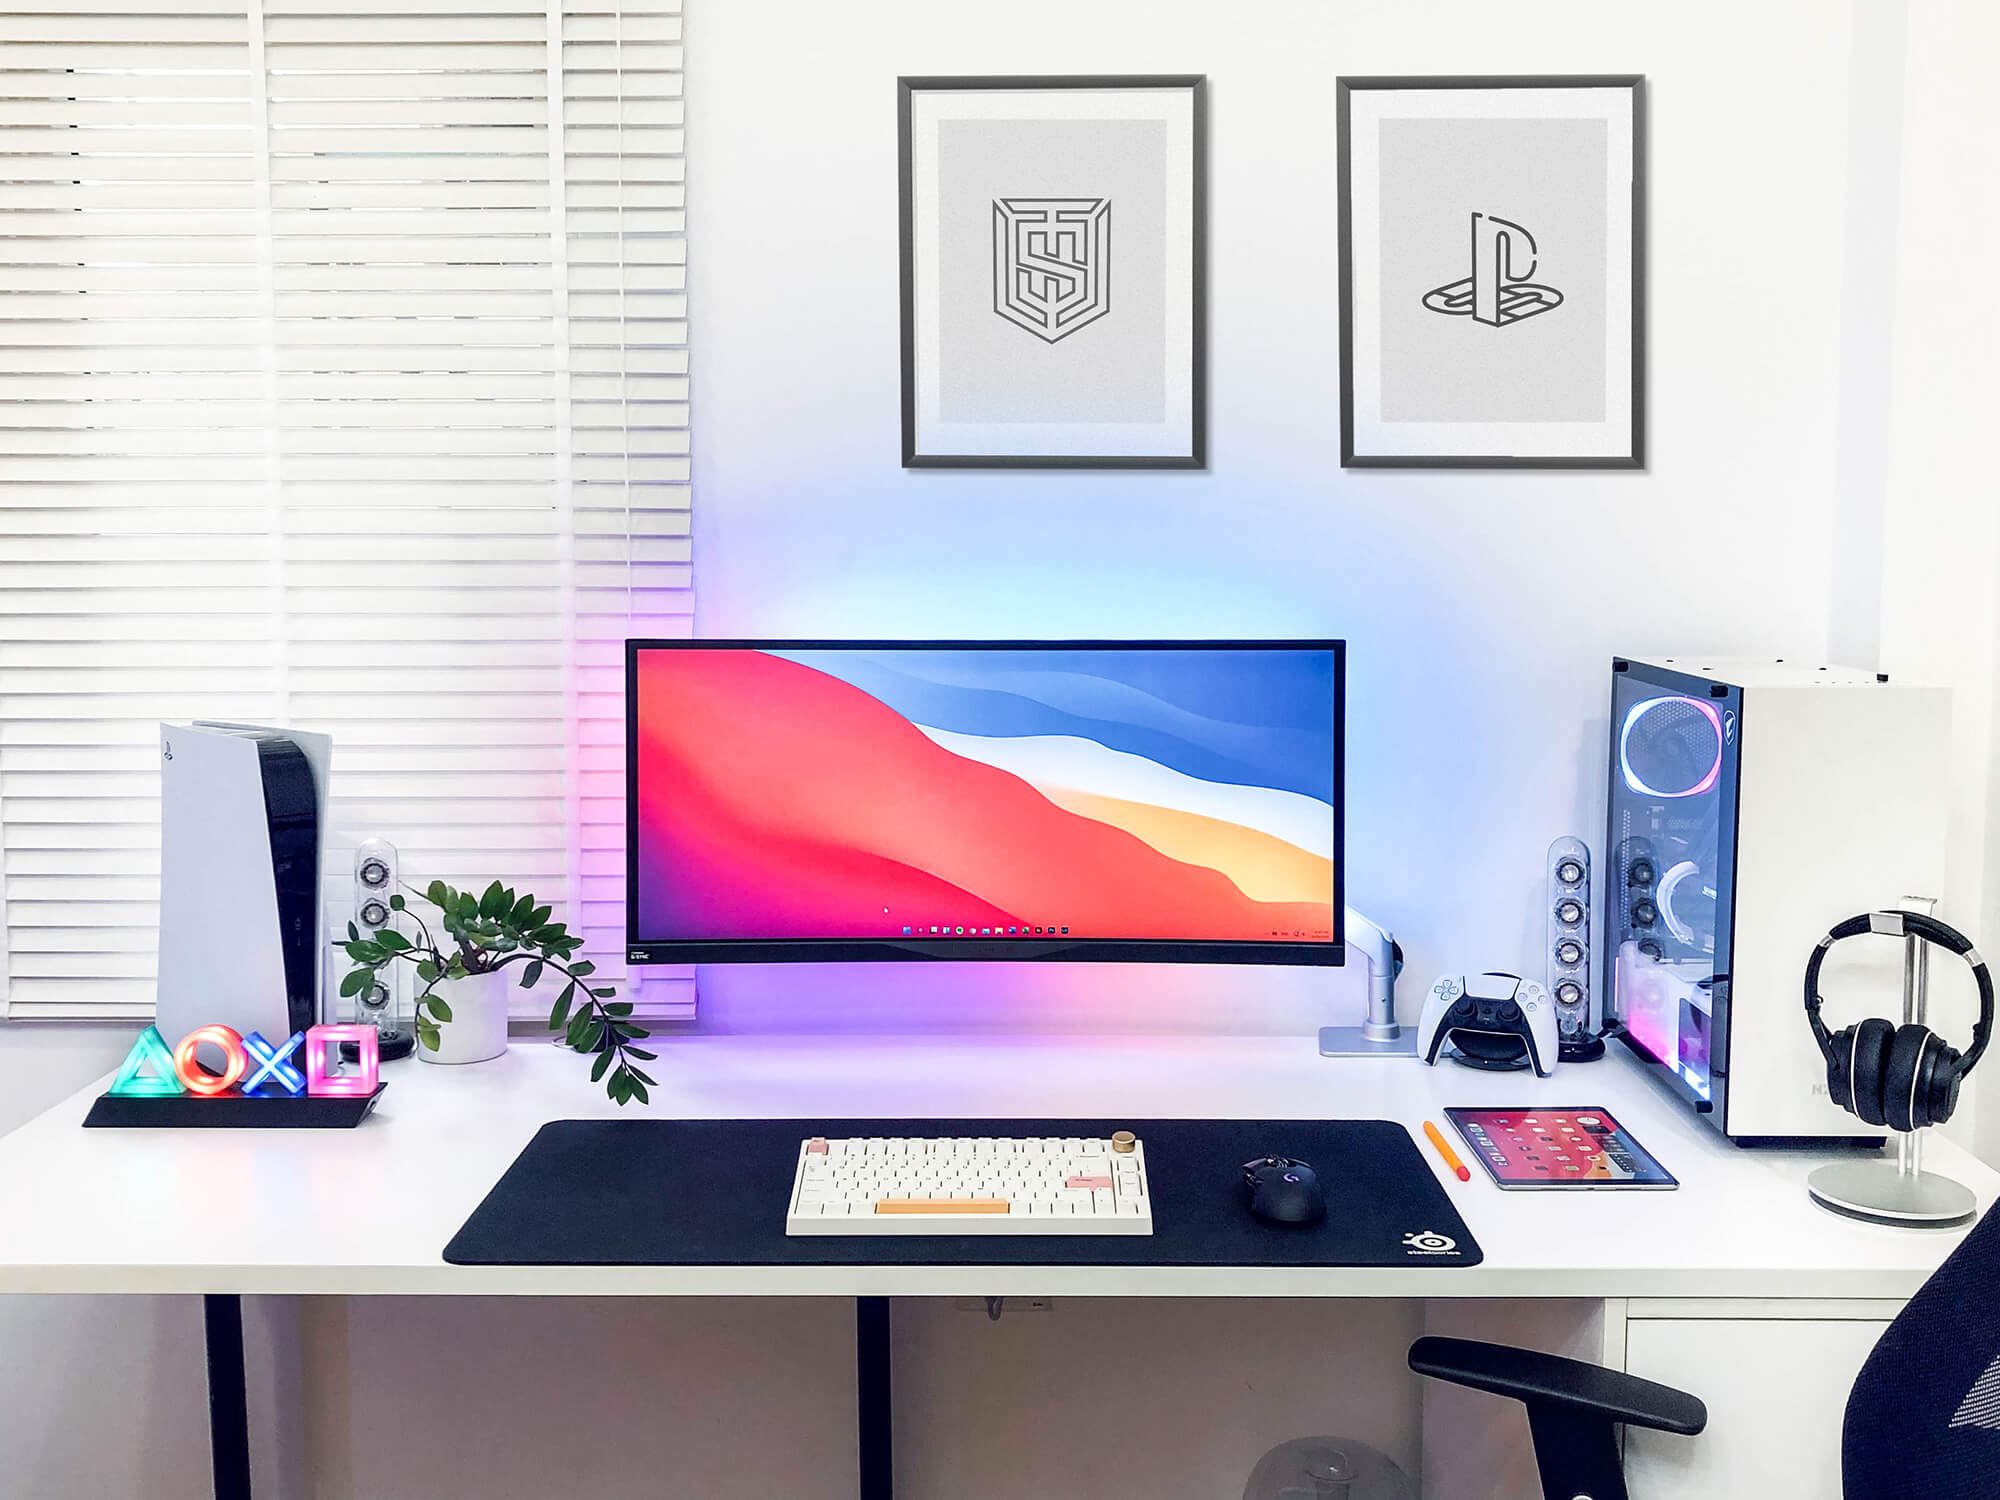 Cable-free desk setup